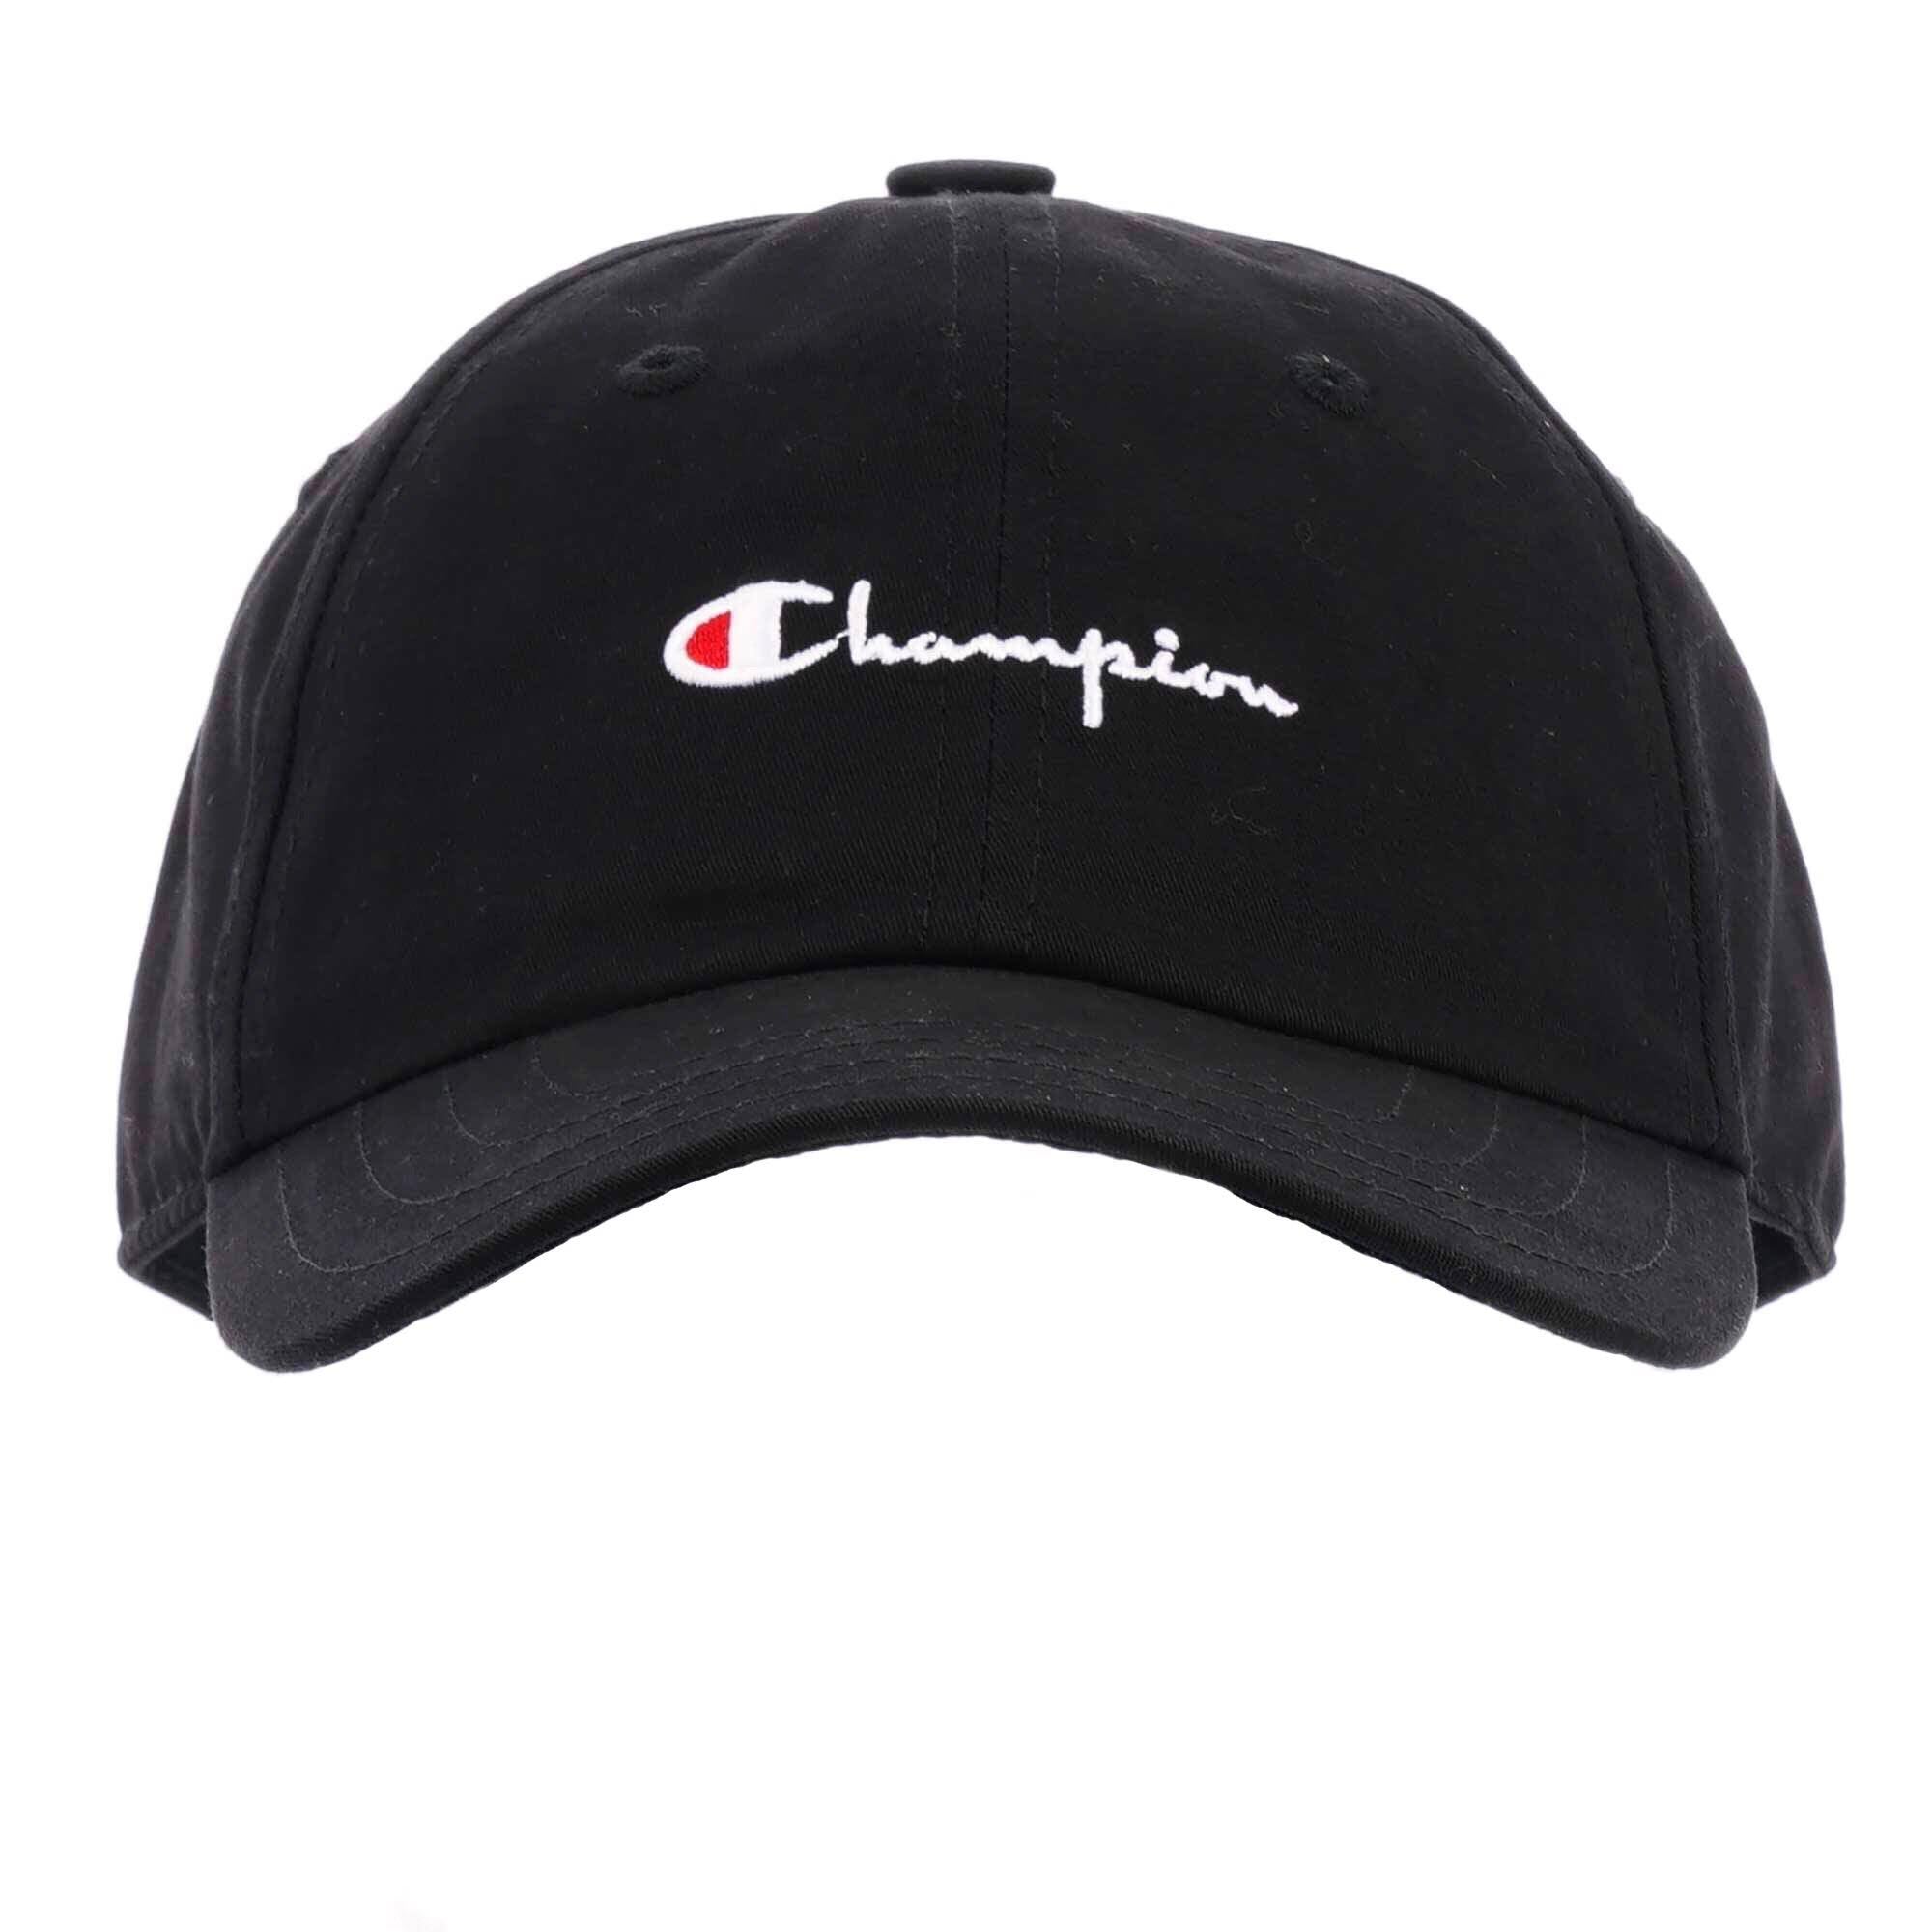 champion script hat